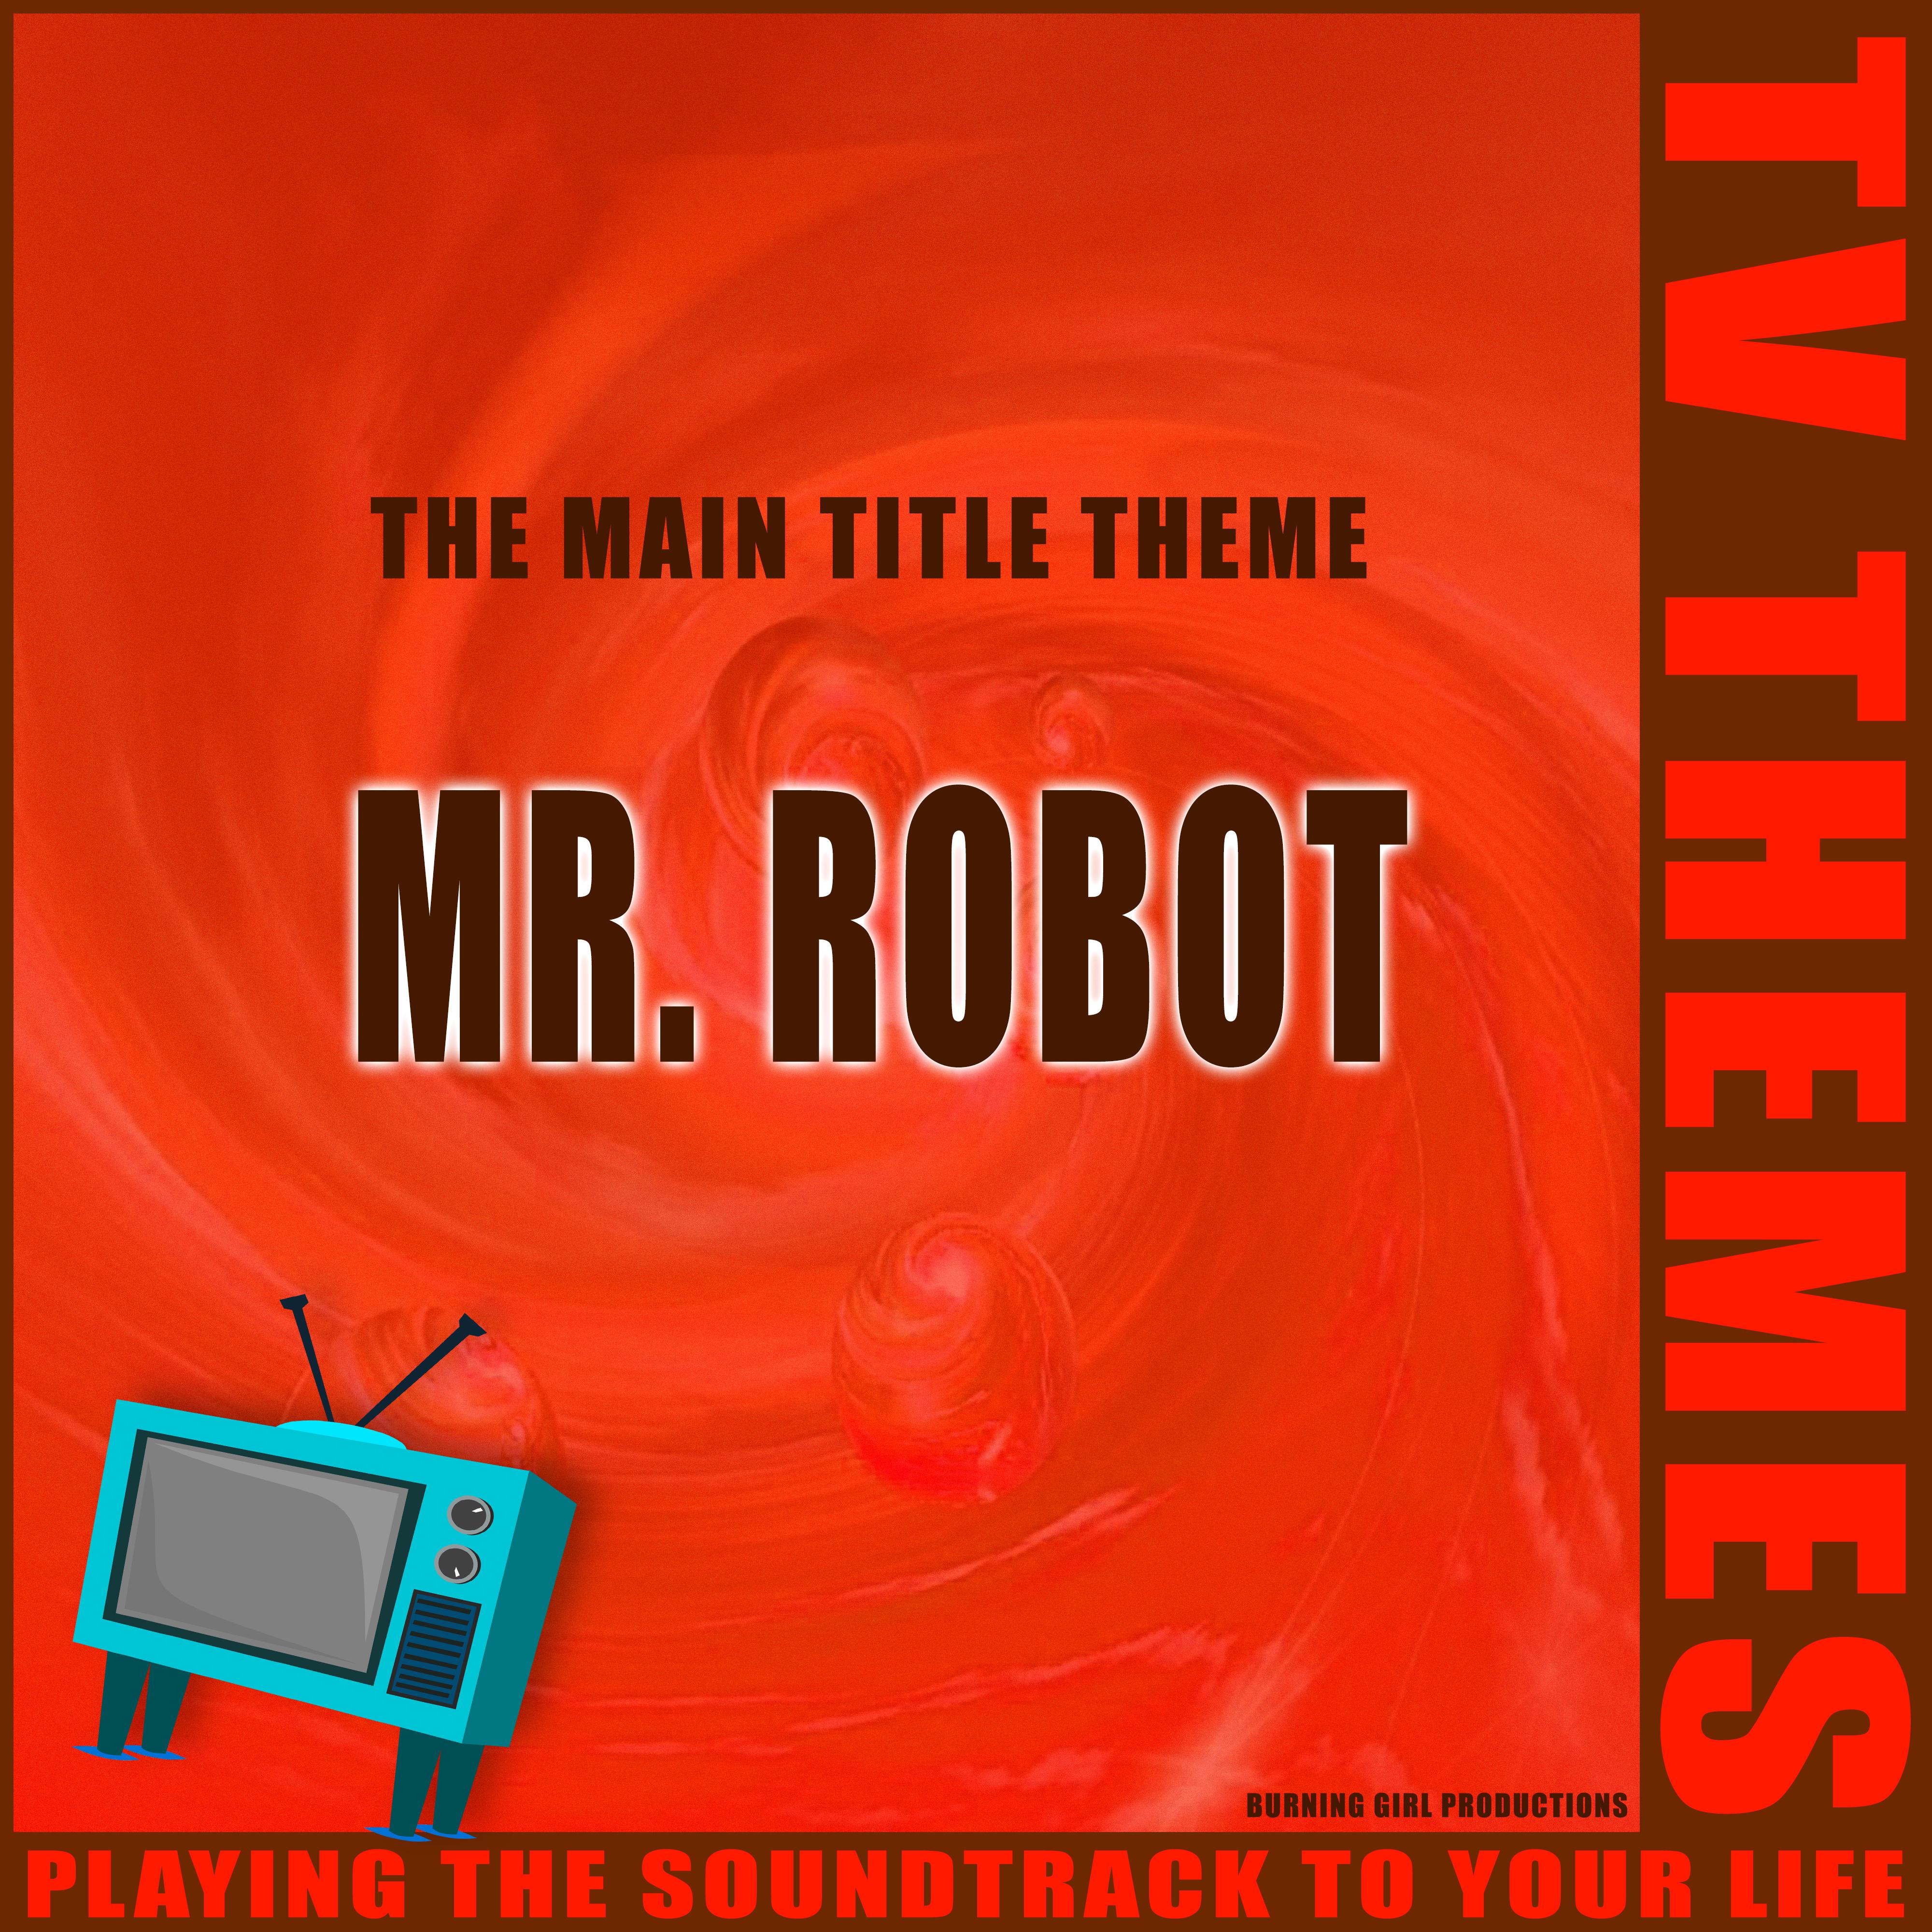 The Main Title Theme - Mr. Robot